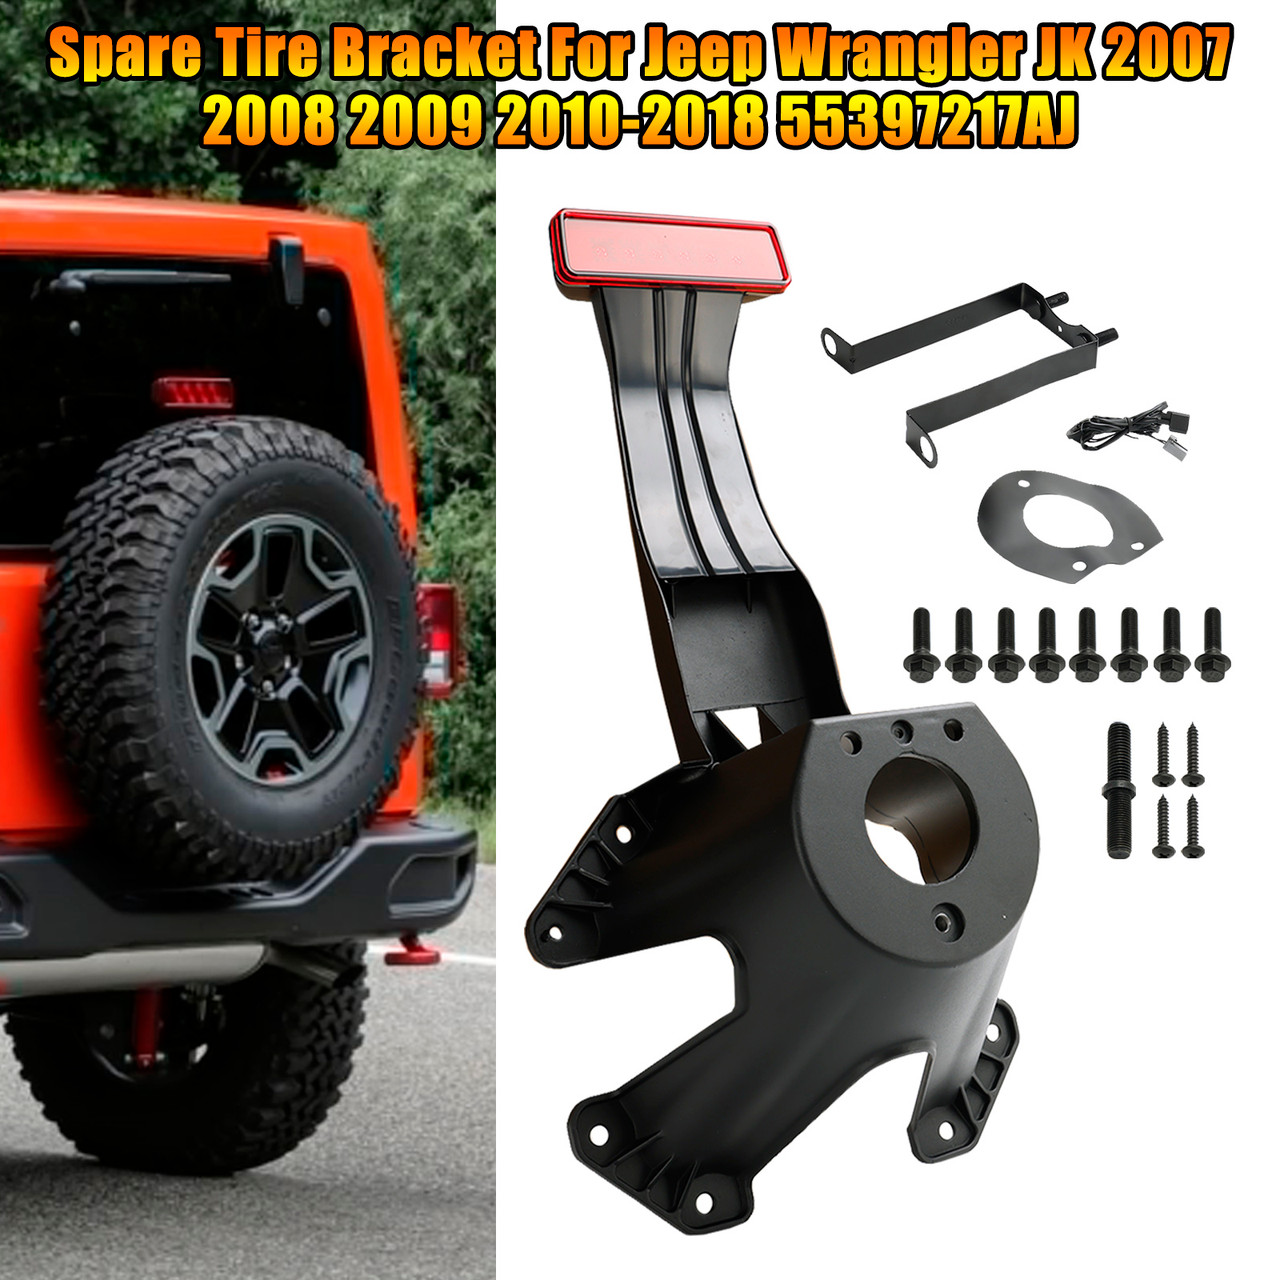 Spare Tire Bracket For Jeep Wrangler JK 2007 2008 2009 2010-2018 55397217AJ